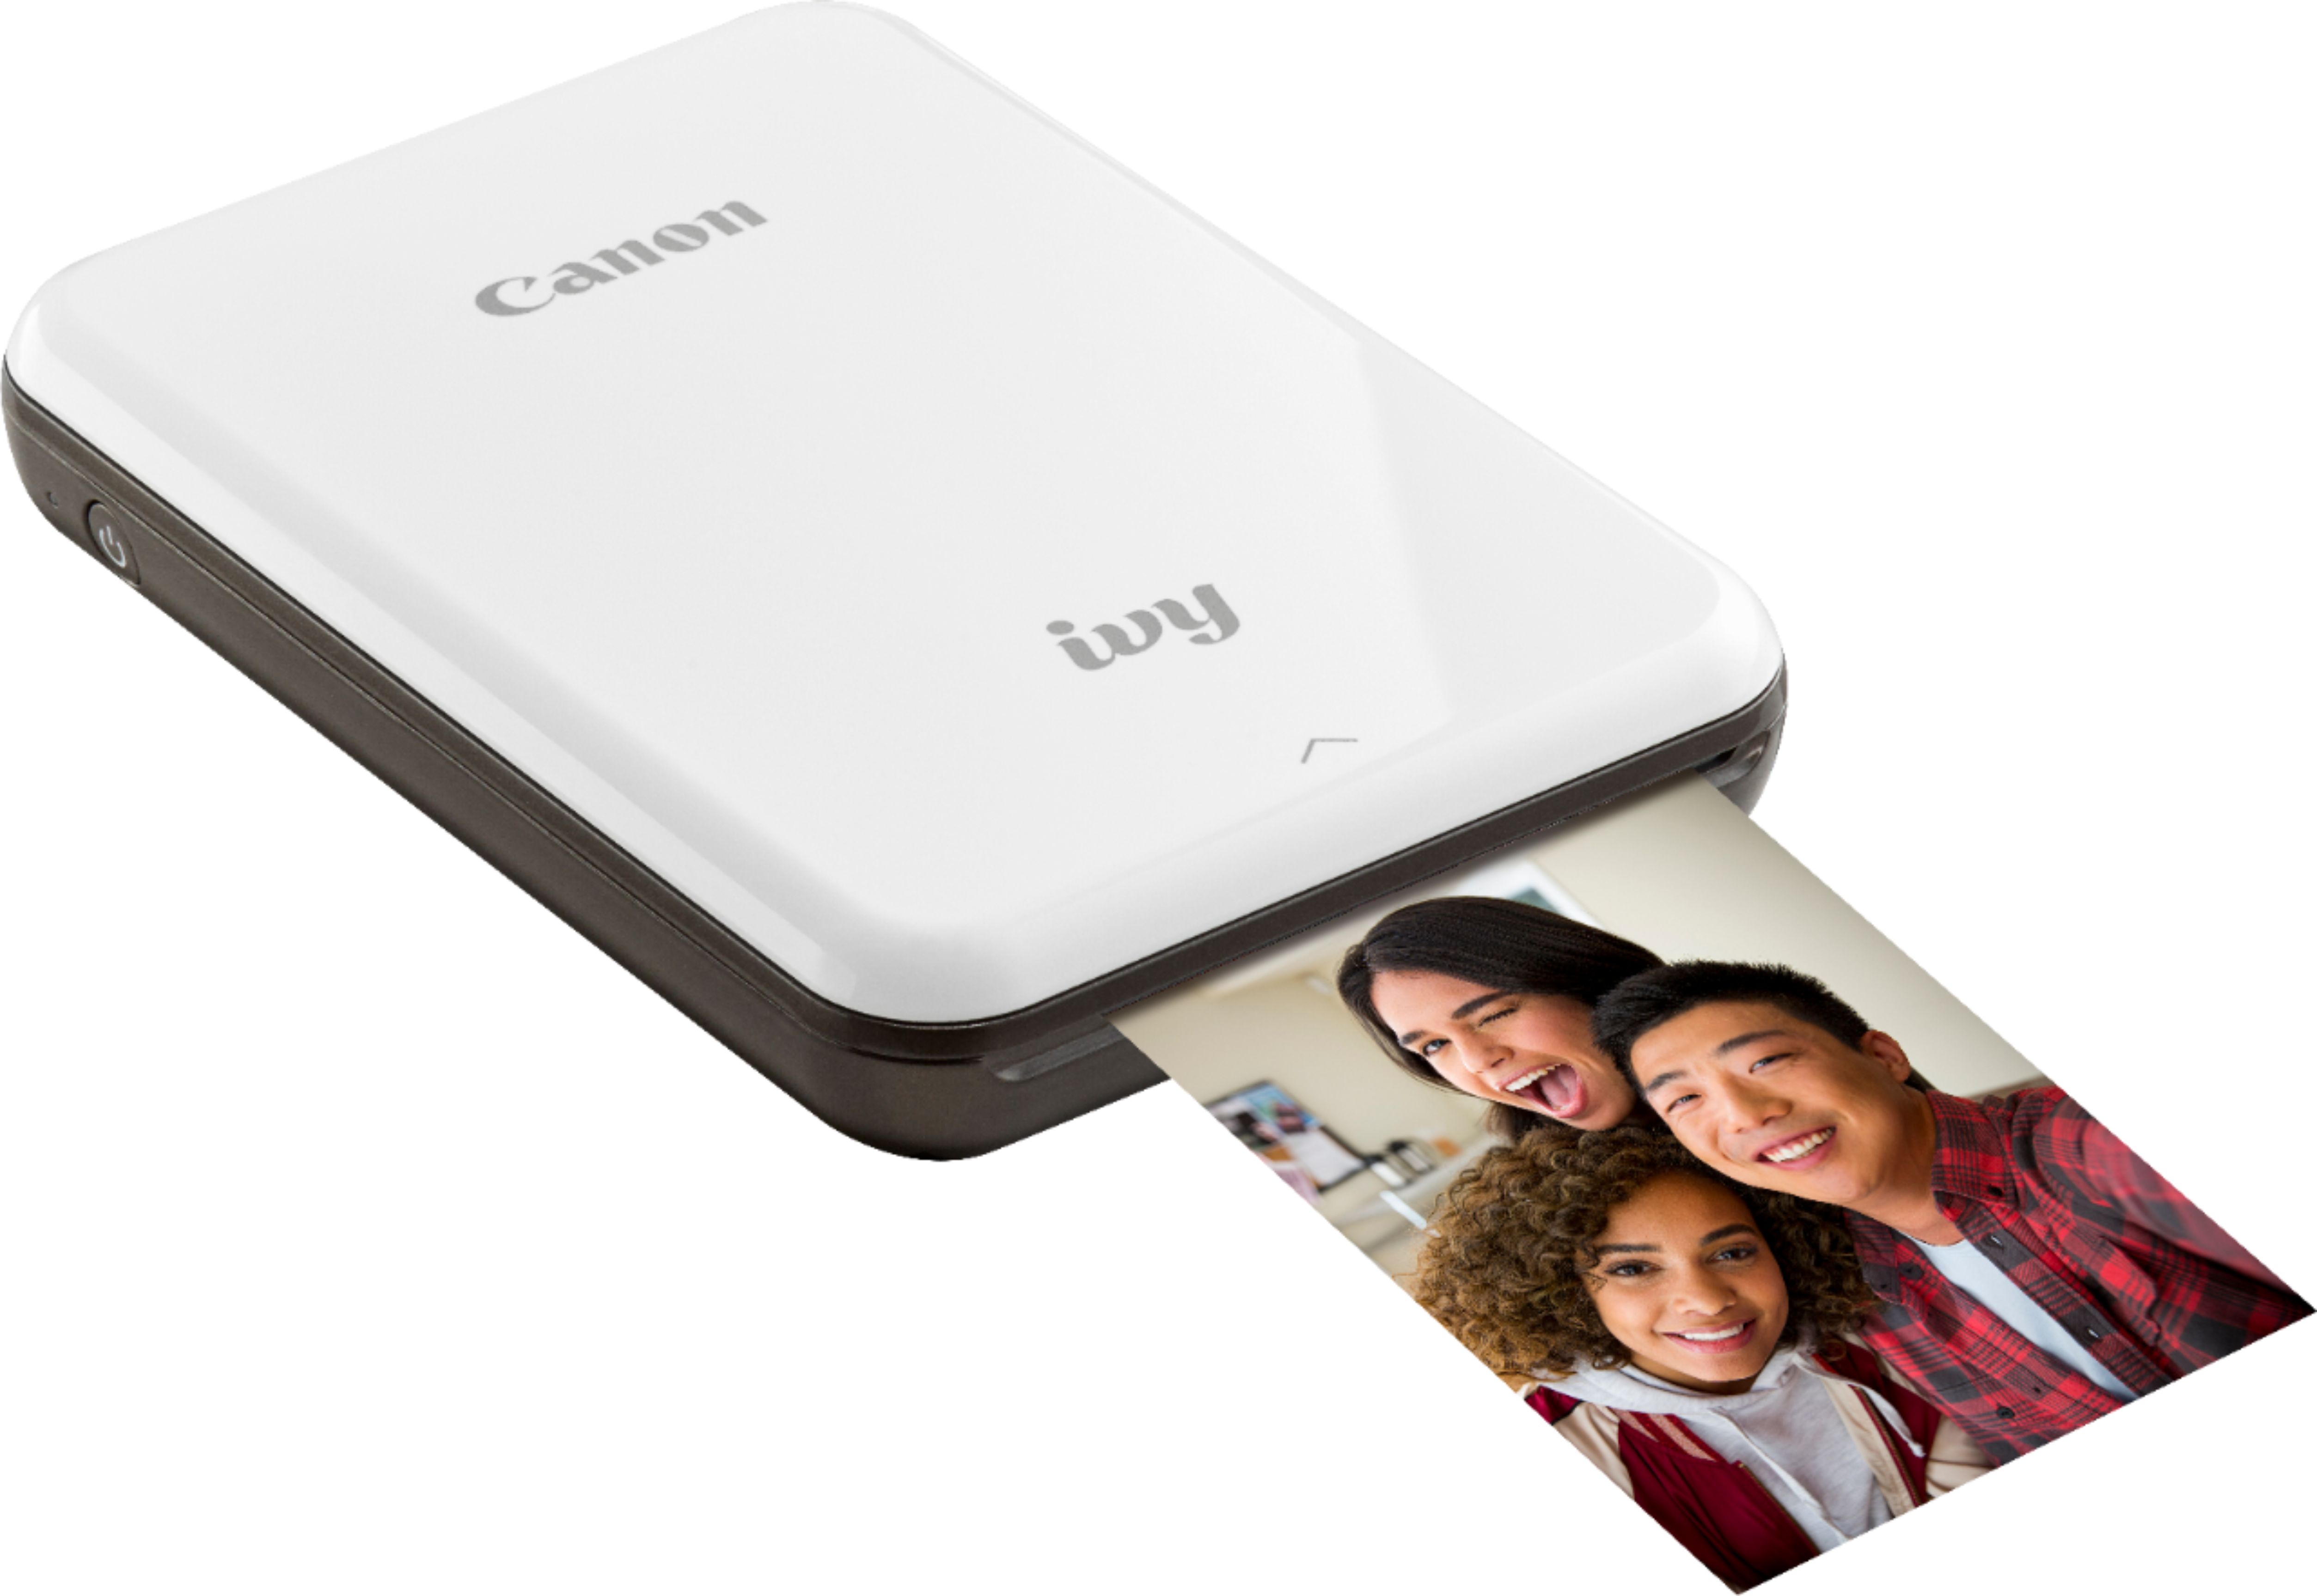 Canon IVY 2 Mini Photo Printer Pure White 5452C018 - Best Buy